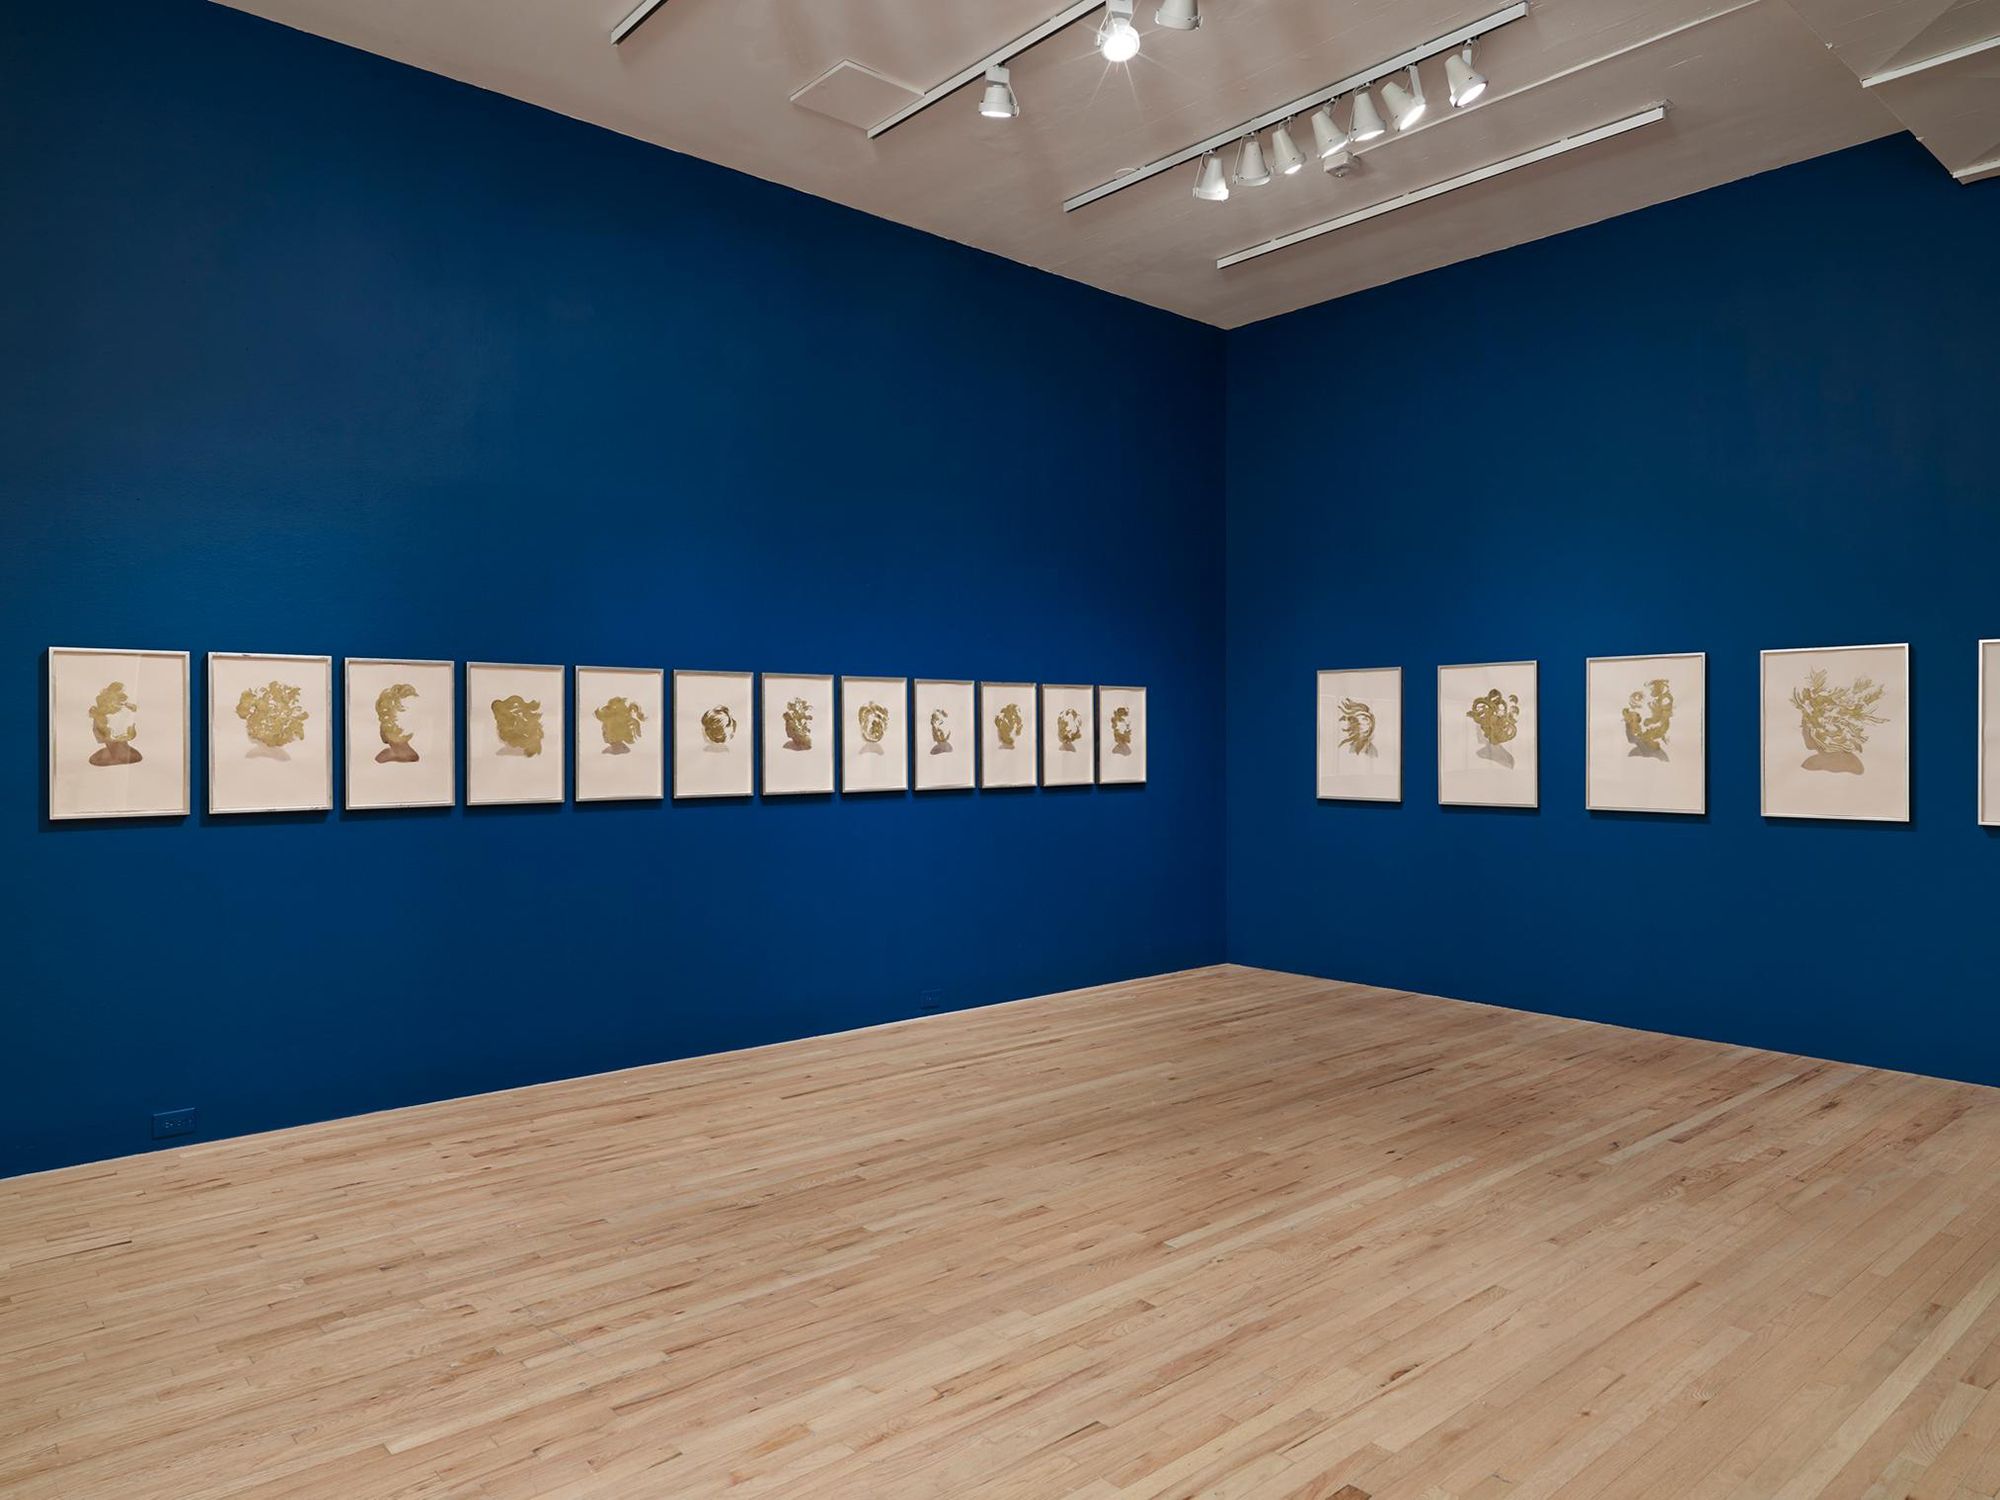  "Lorna Simpson: Works on Paper", Aspen Art Museum, Aspen, CO 2013